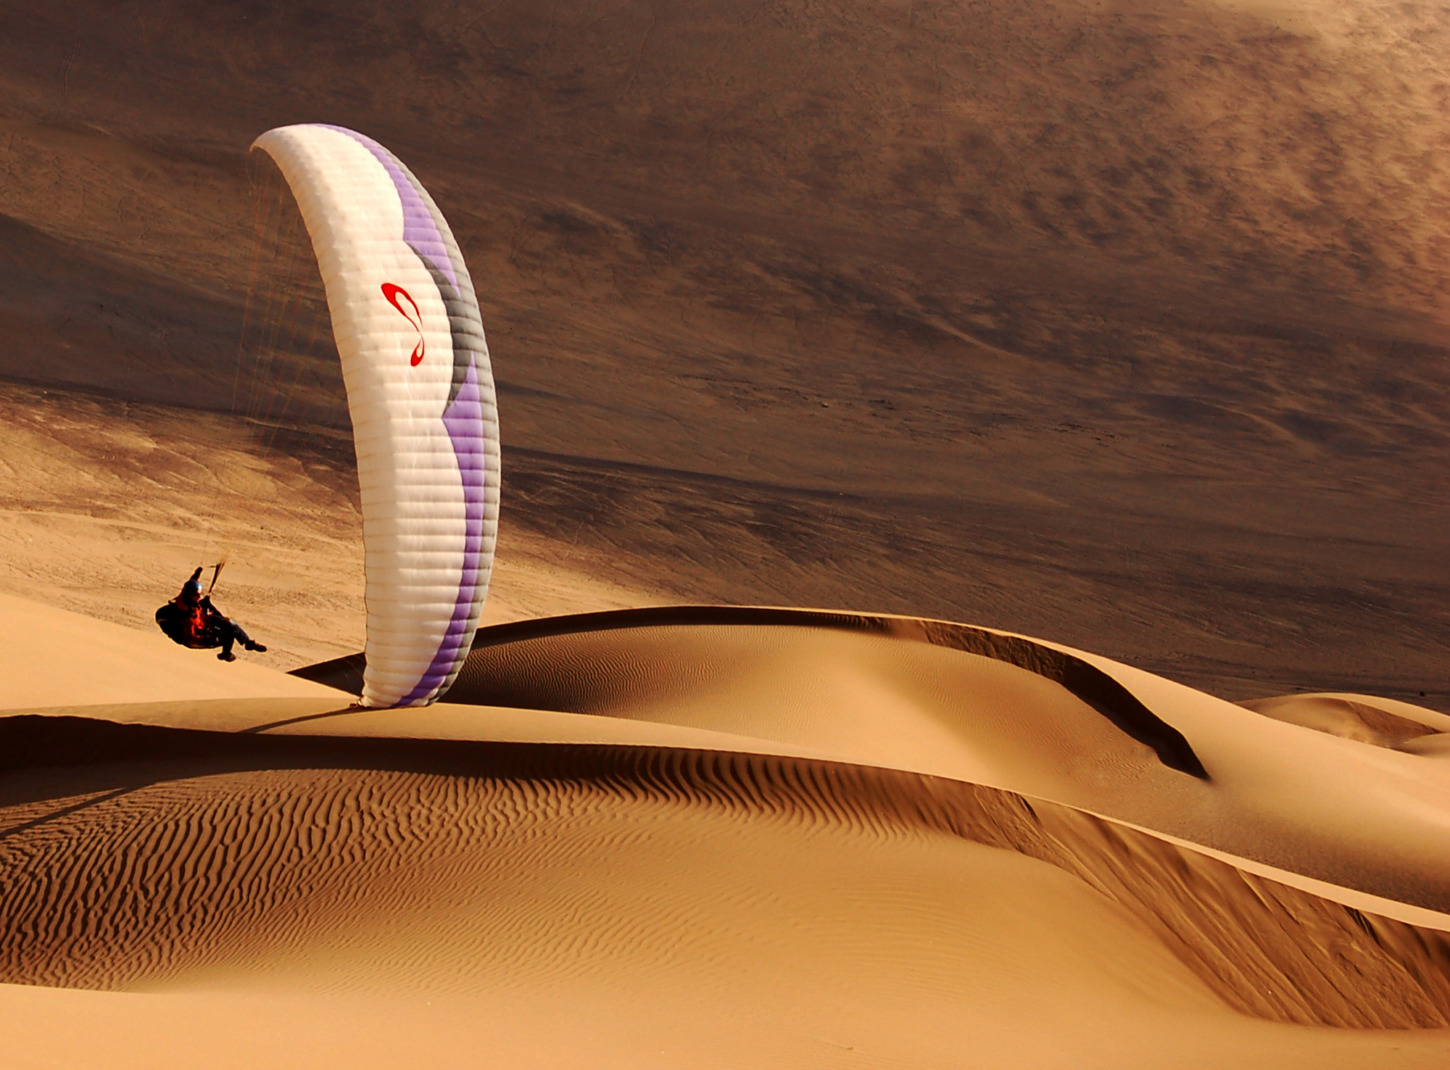 Francois-Ragolski-Glide-Paragliding Sand dune